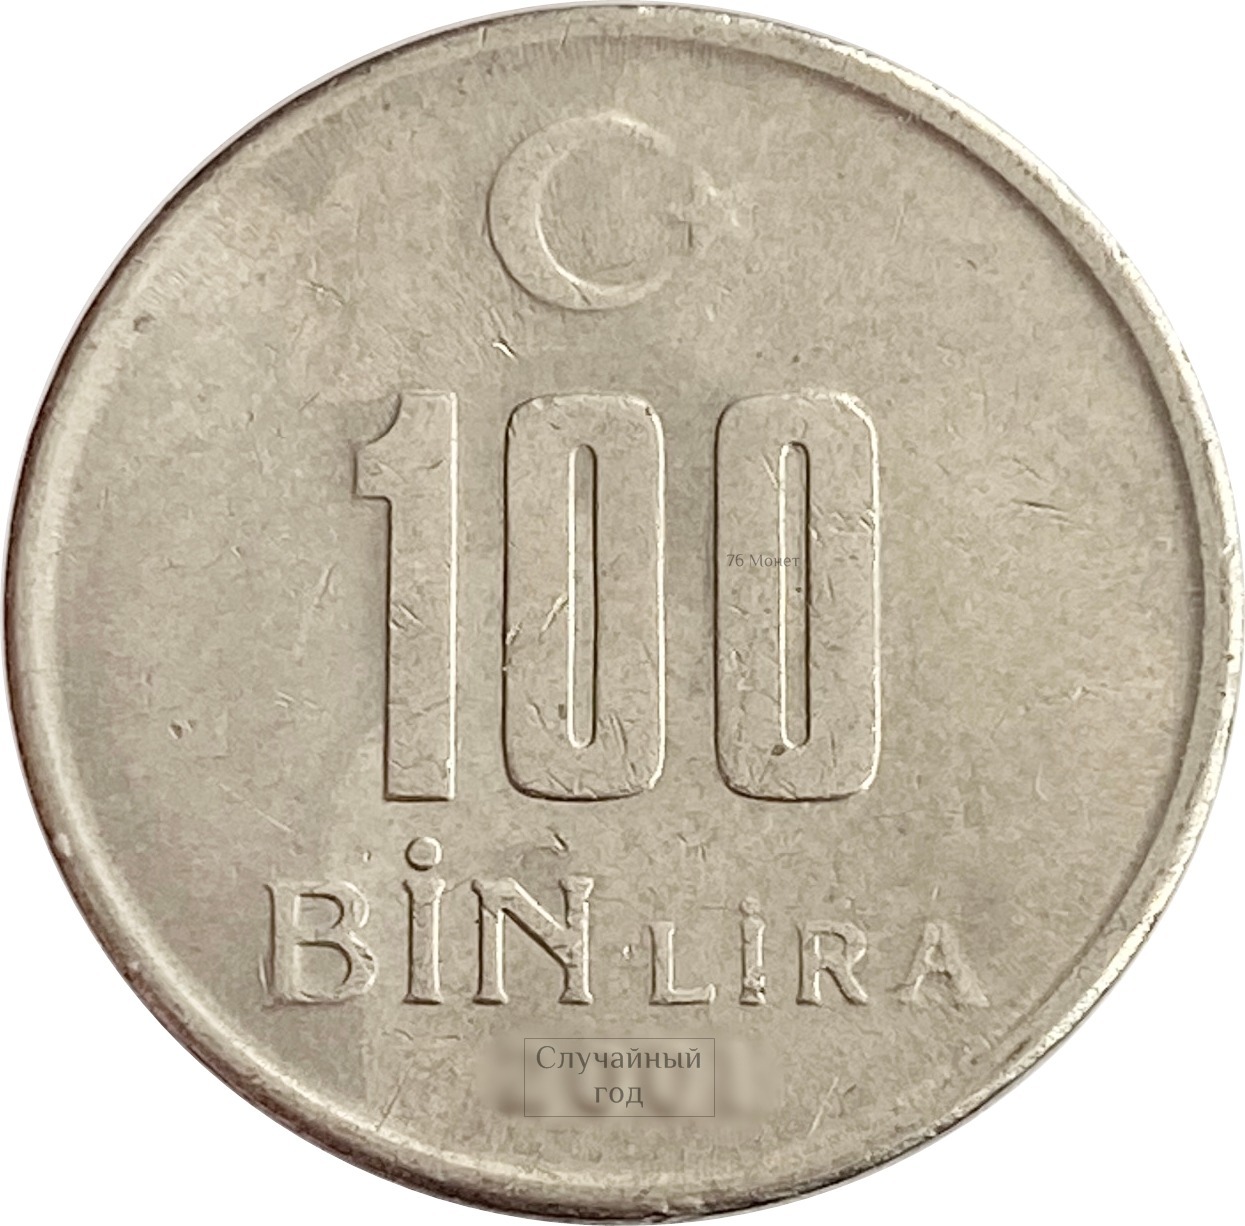 15 лир. Турецкая монета 100. Турция 100000 лир 2001 год.